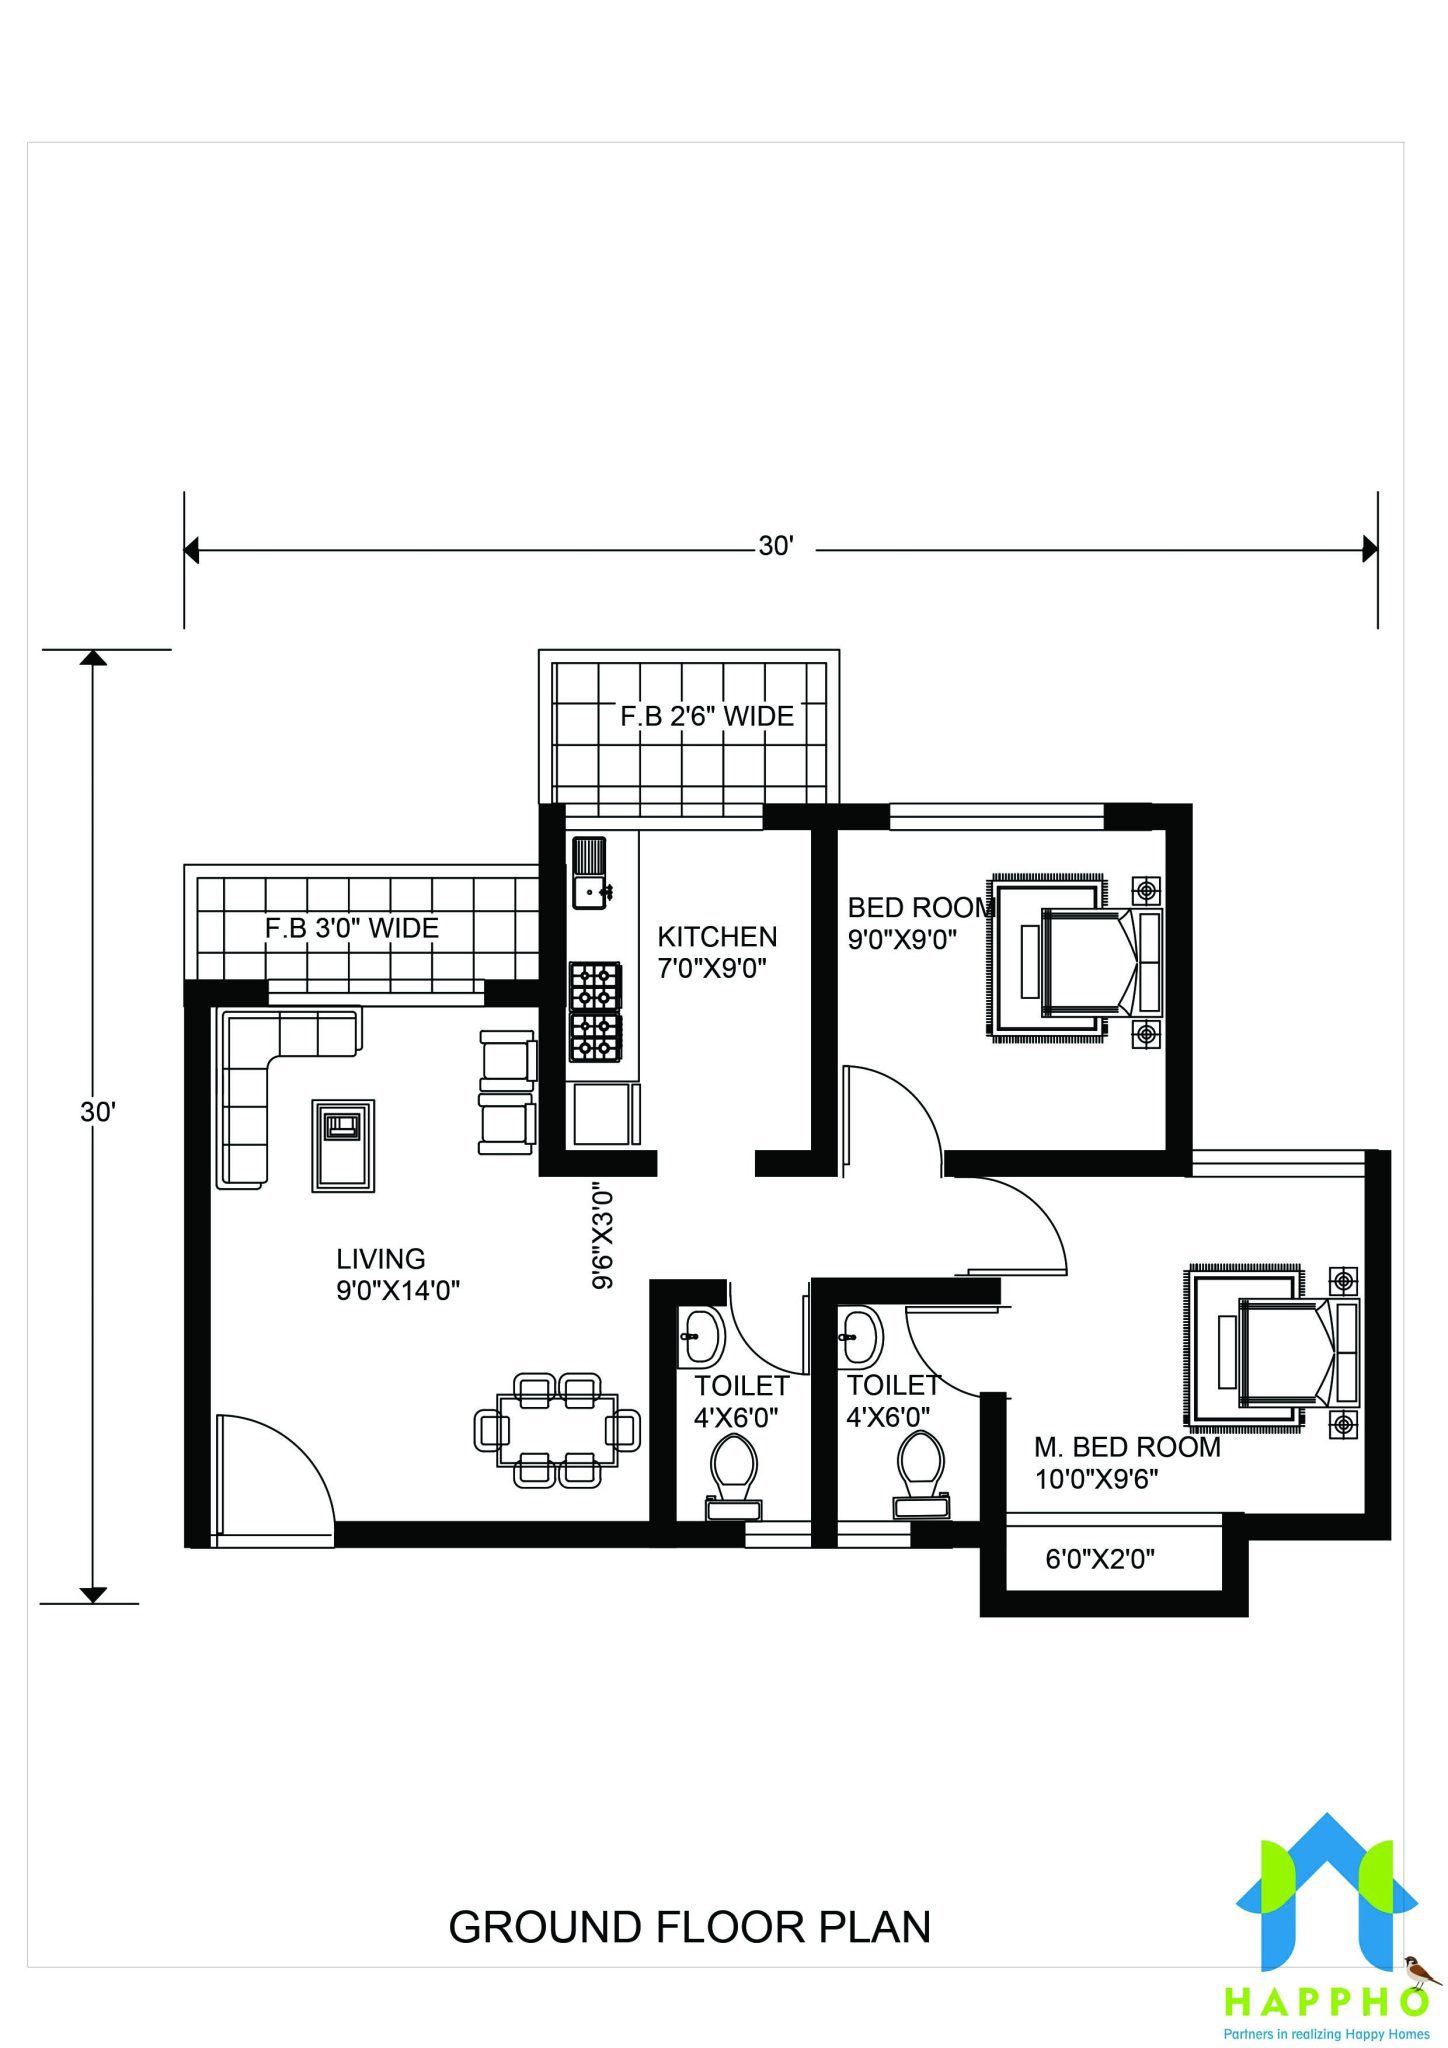 Floor Plan for 30 x 30 Feet plot 2BHK (900 Square Feet